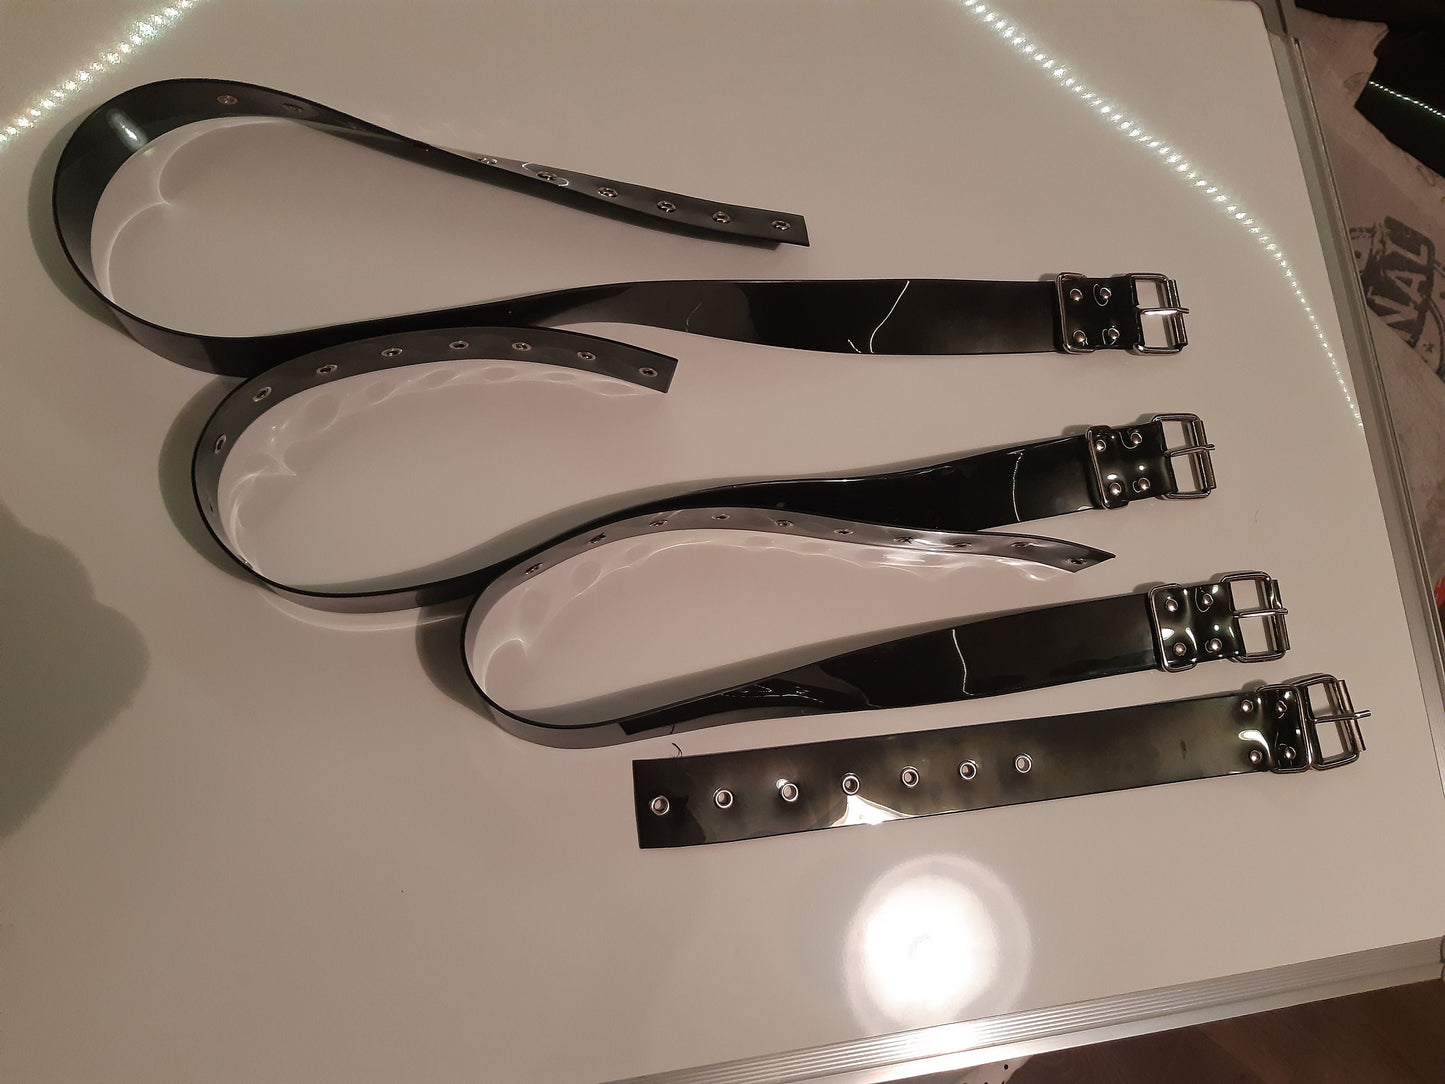 Set of 8 bondage belt in black PVC